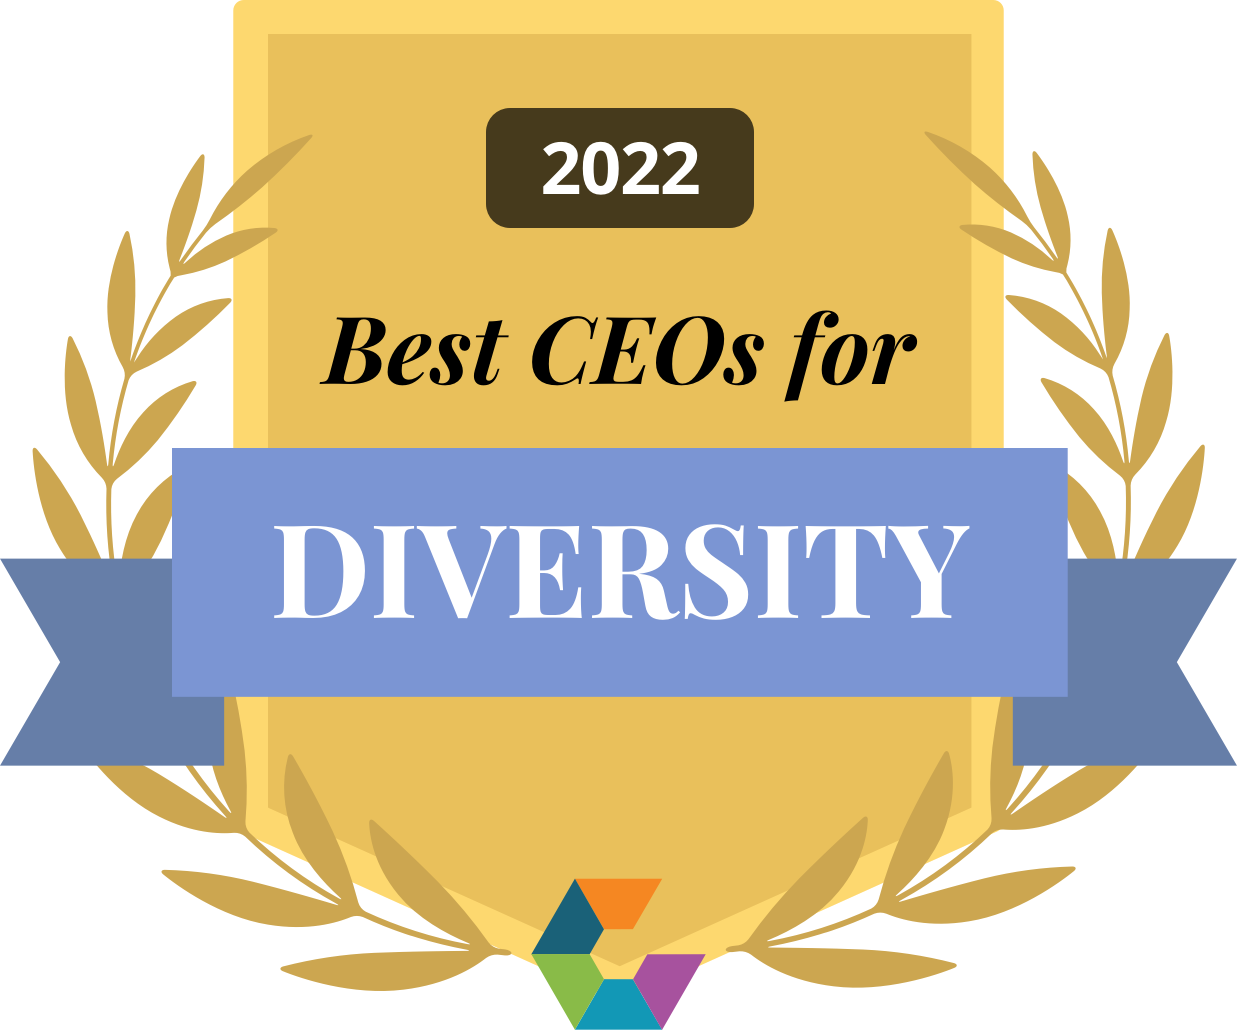 Best CEOs for DIVERSITY 2022